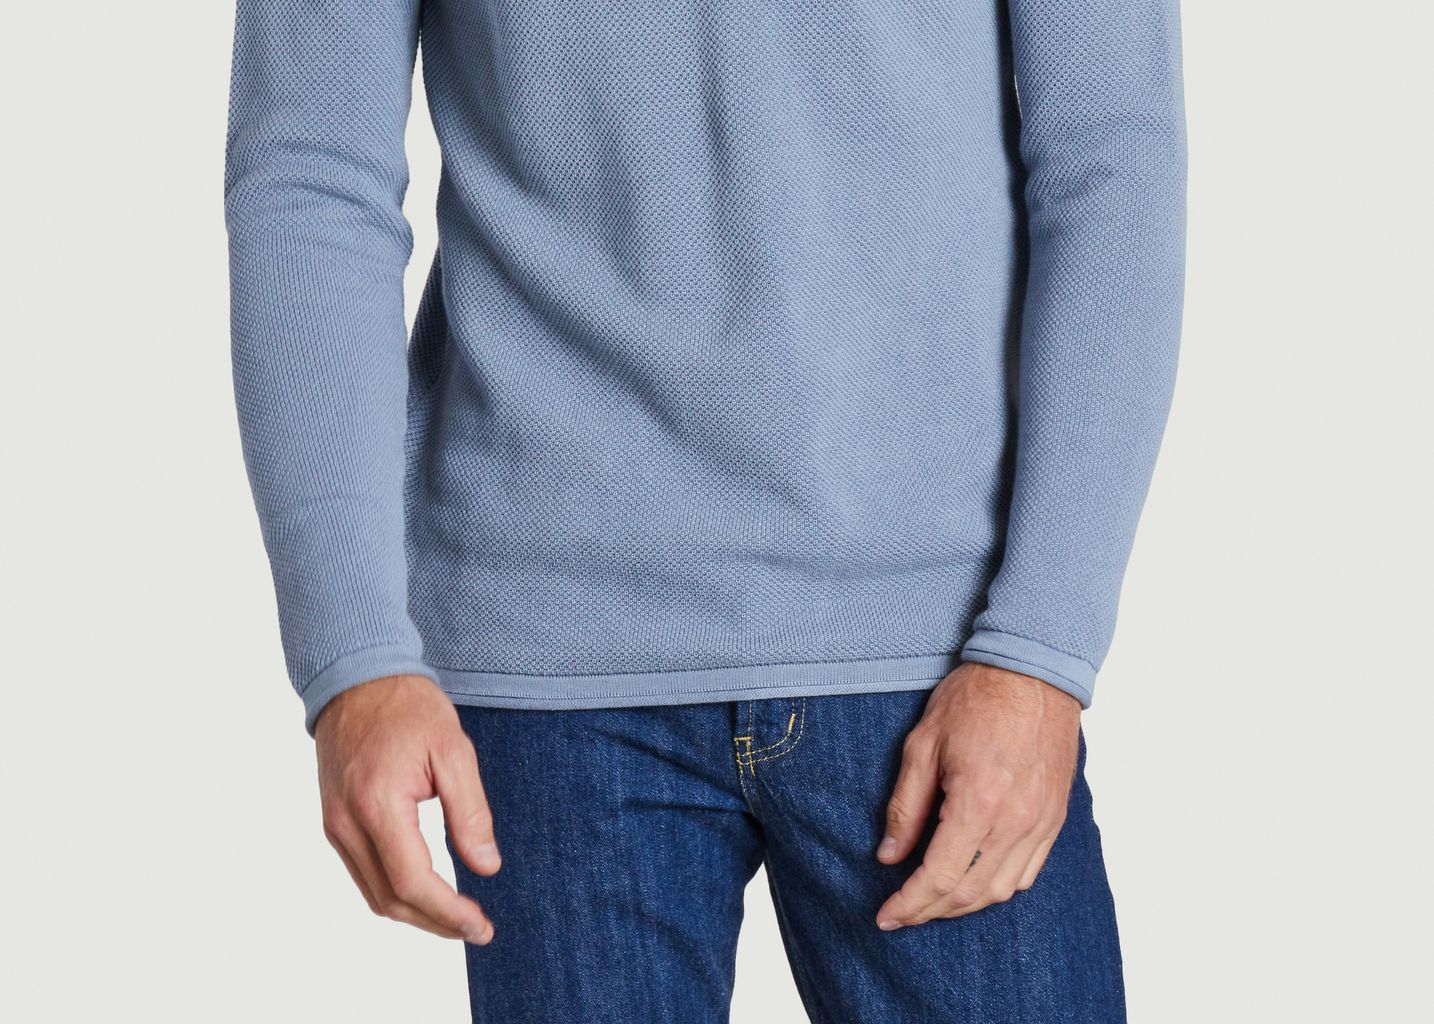 Lightweight organic cotton sweater - KCA